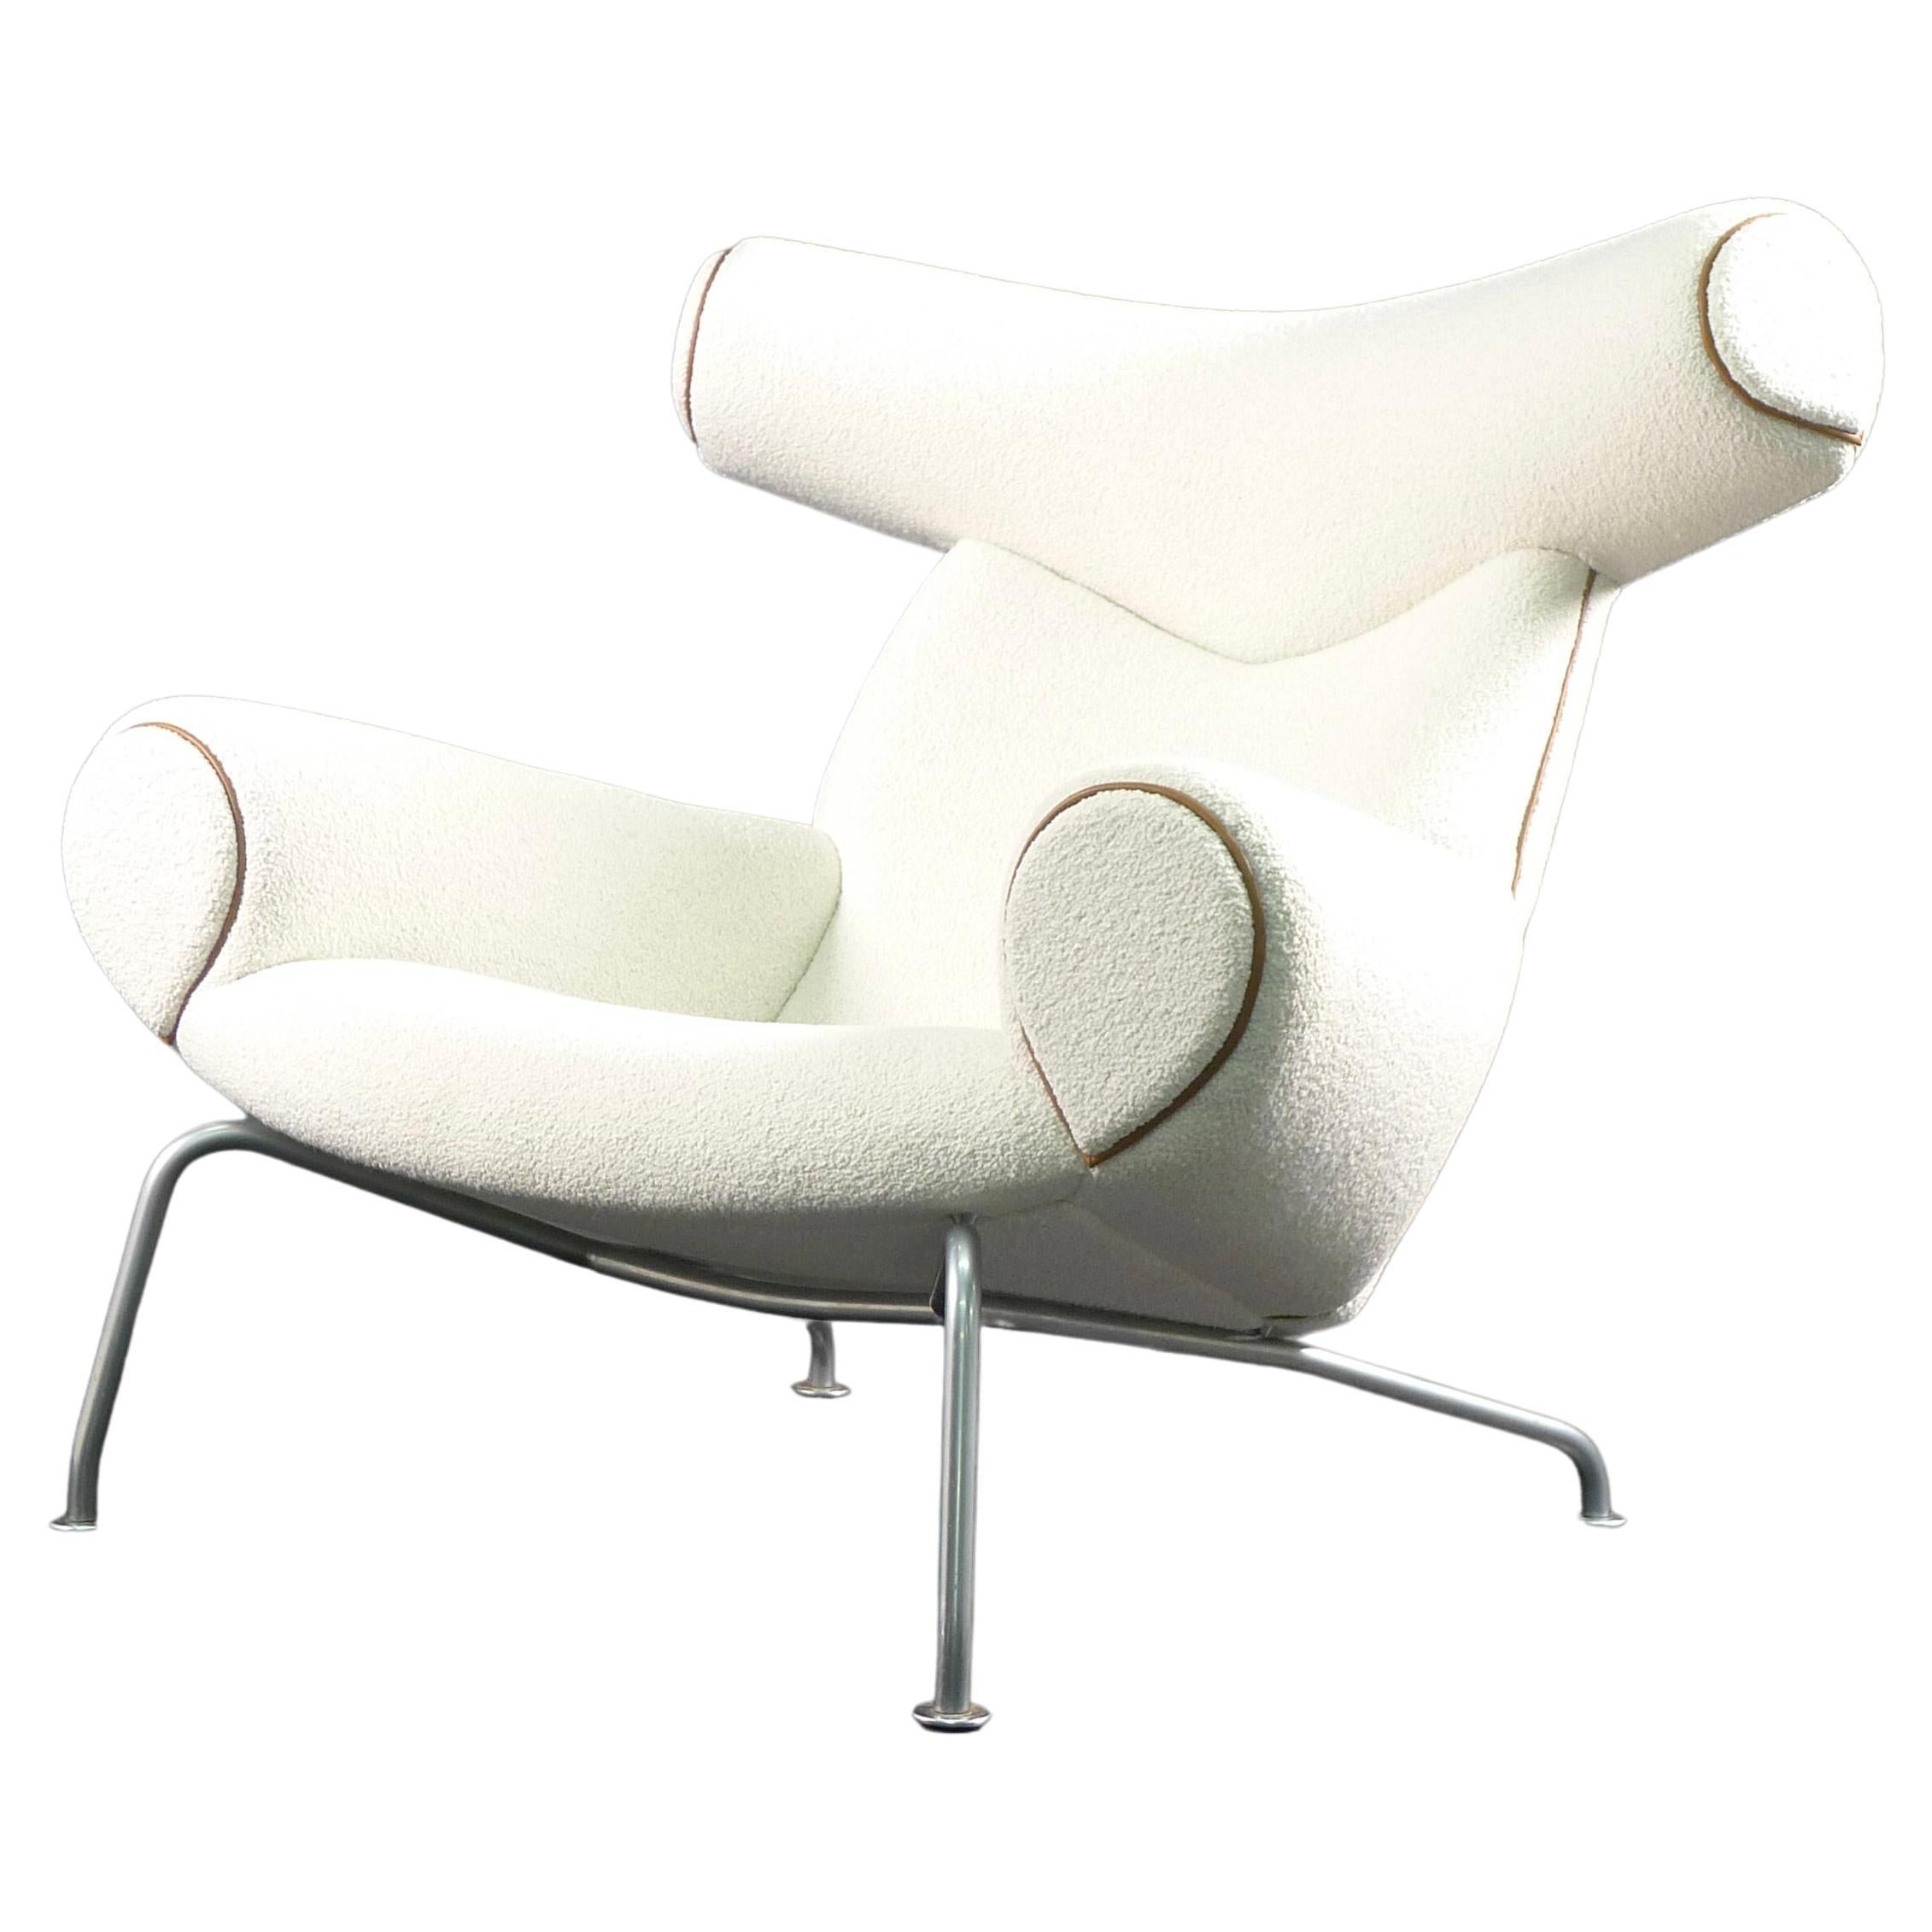 Hans Wegner, Ox Chair, Model Ap-46, Designed 1960, Made by Ap Stolen, Copenhagen